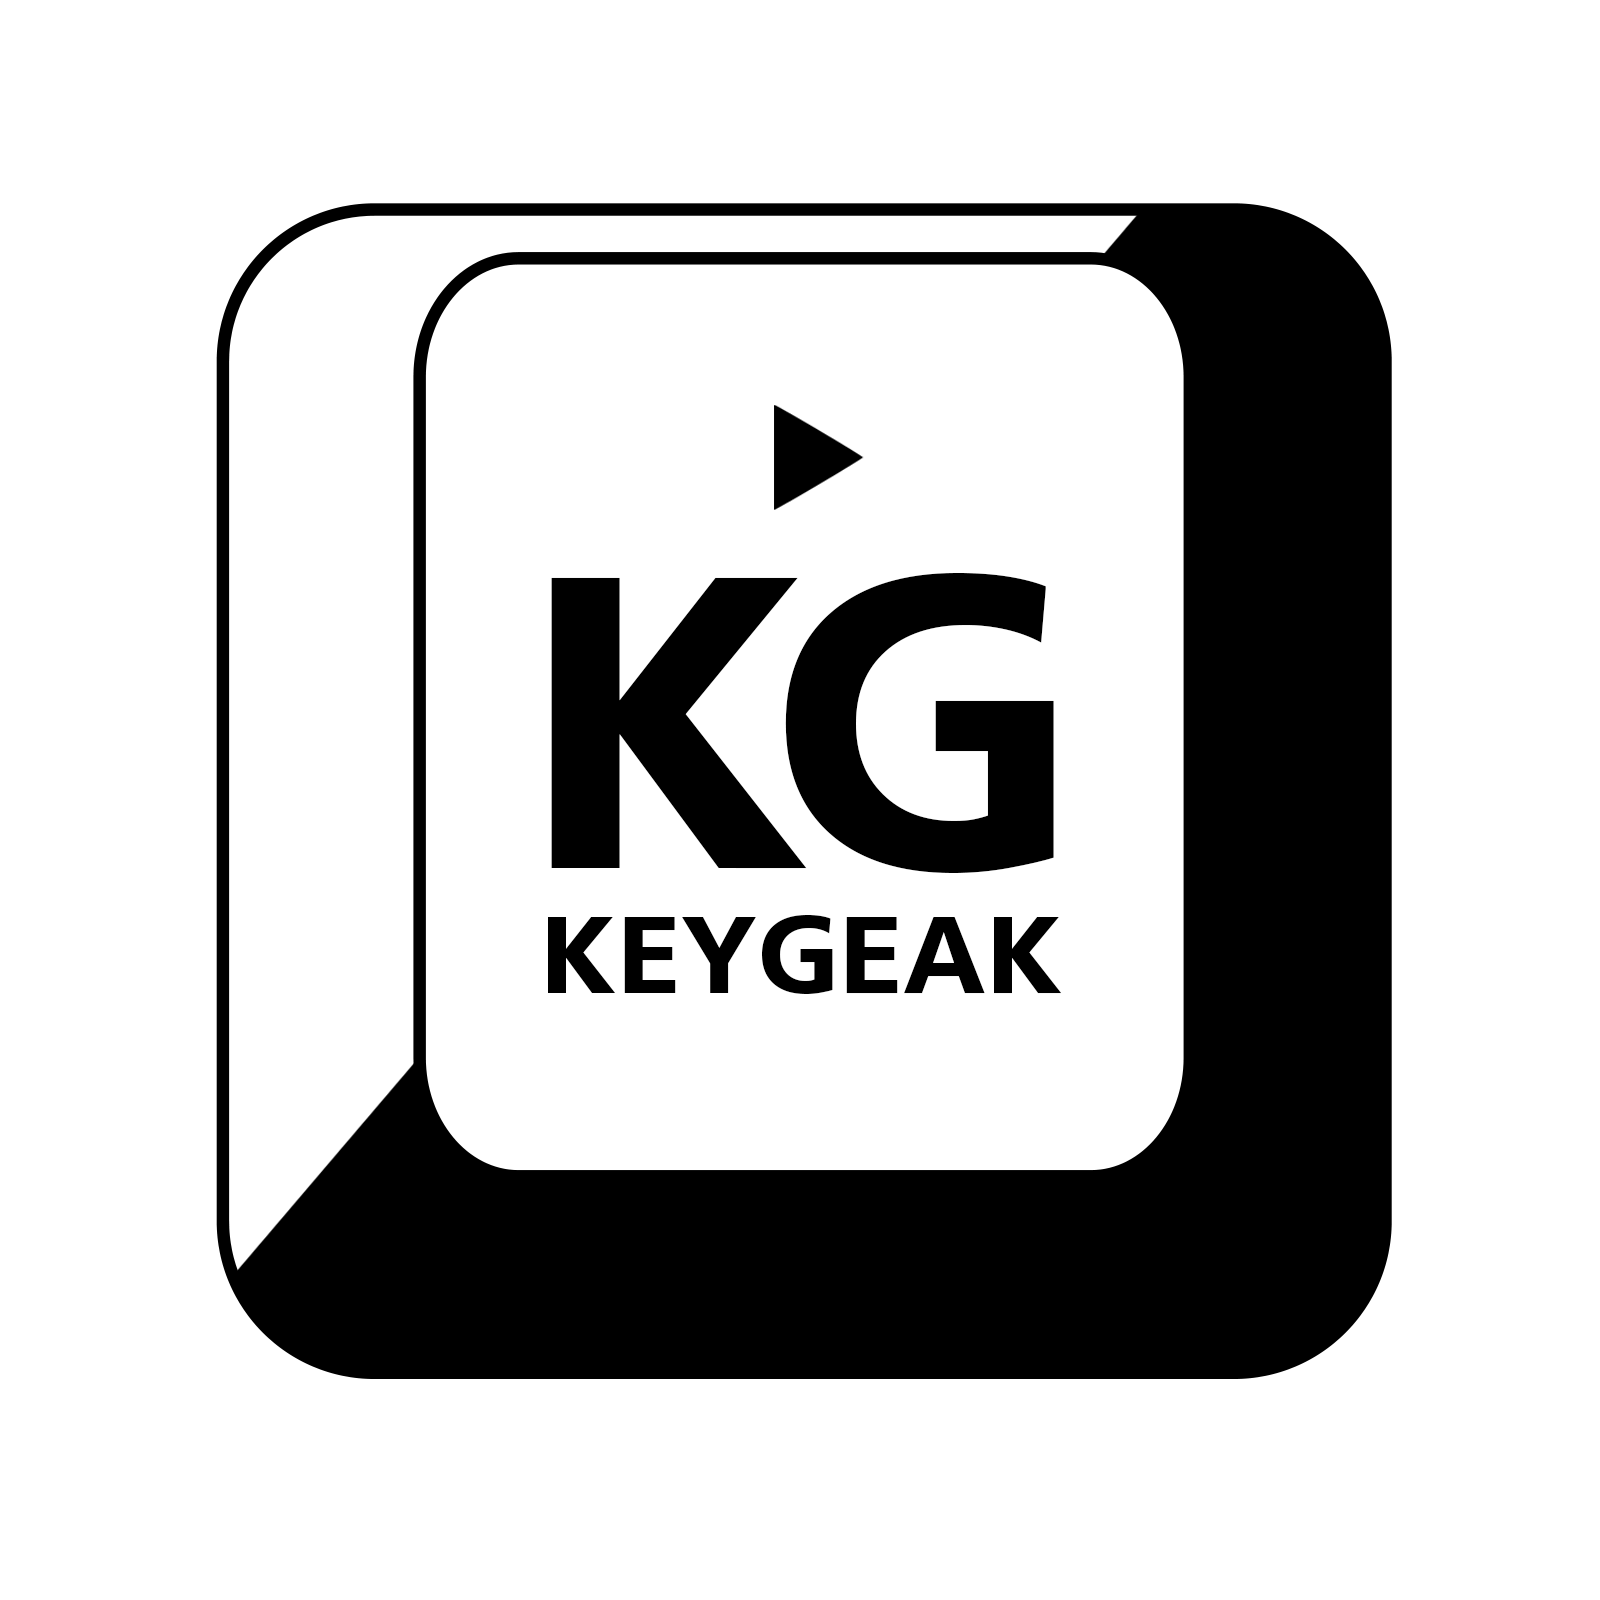 KeyGeak Profile and Links | linkpop.com